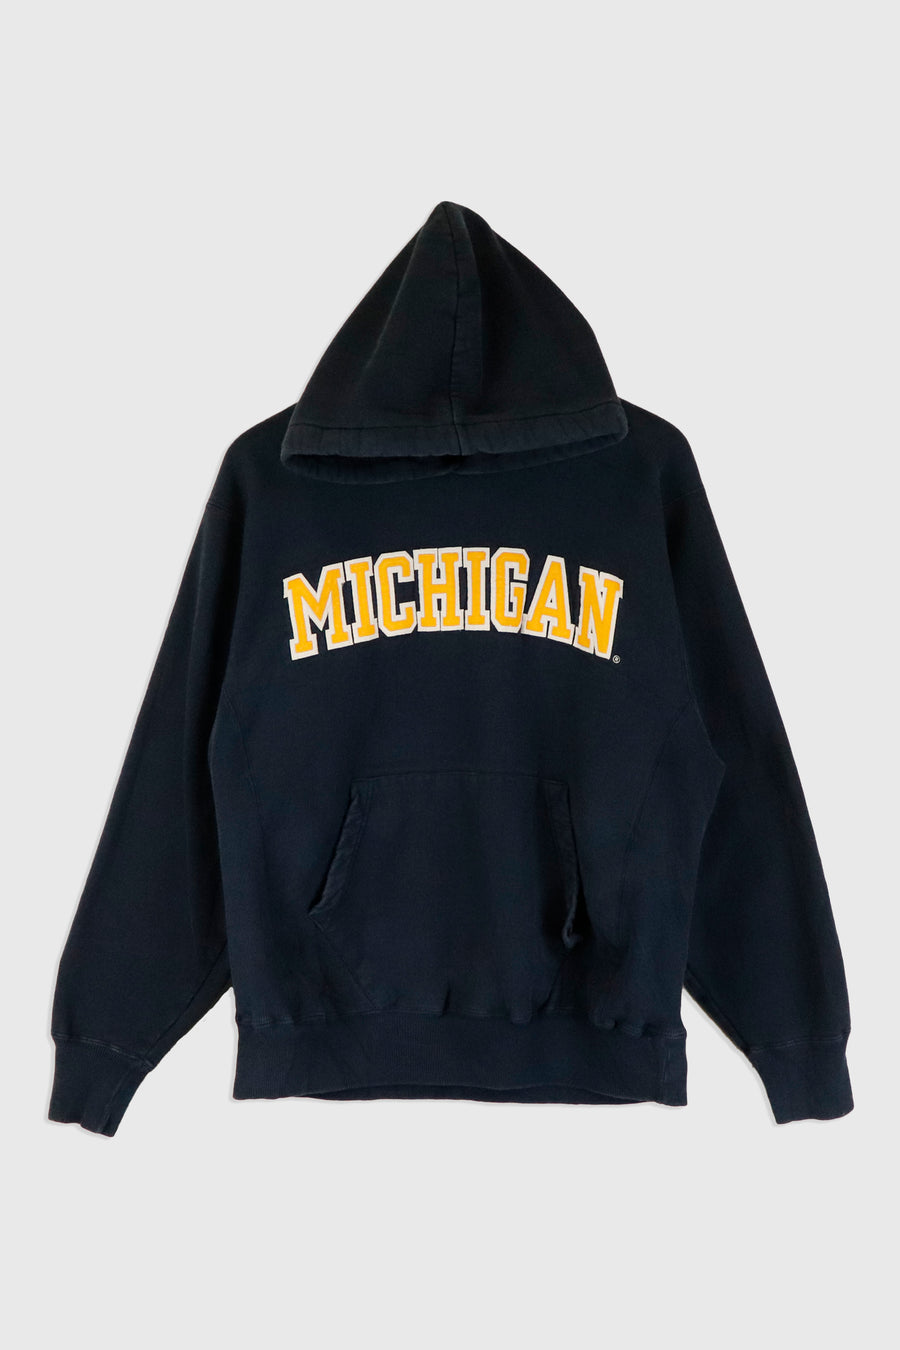 Vintage Michigan Plain Hooded Sweatshirt Sz S